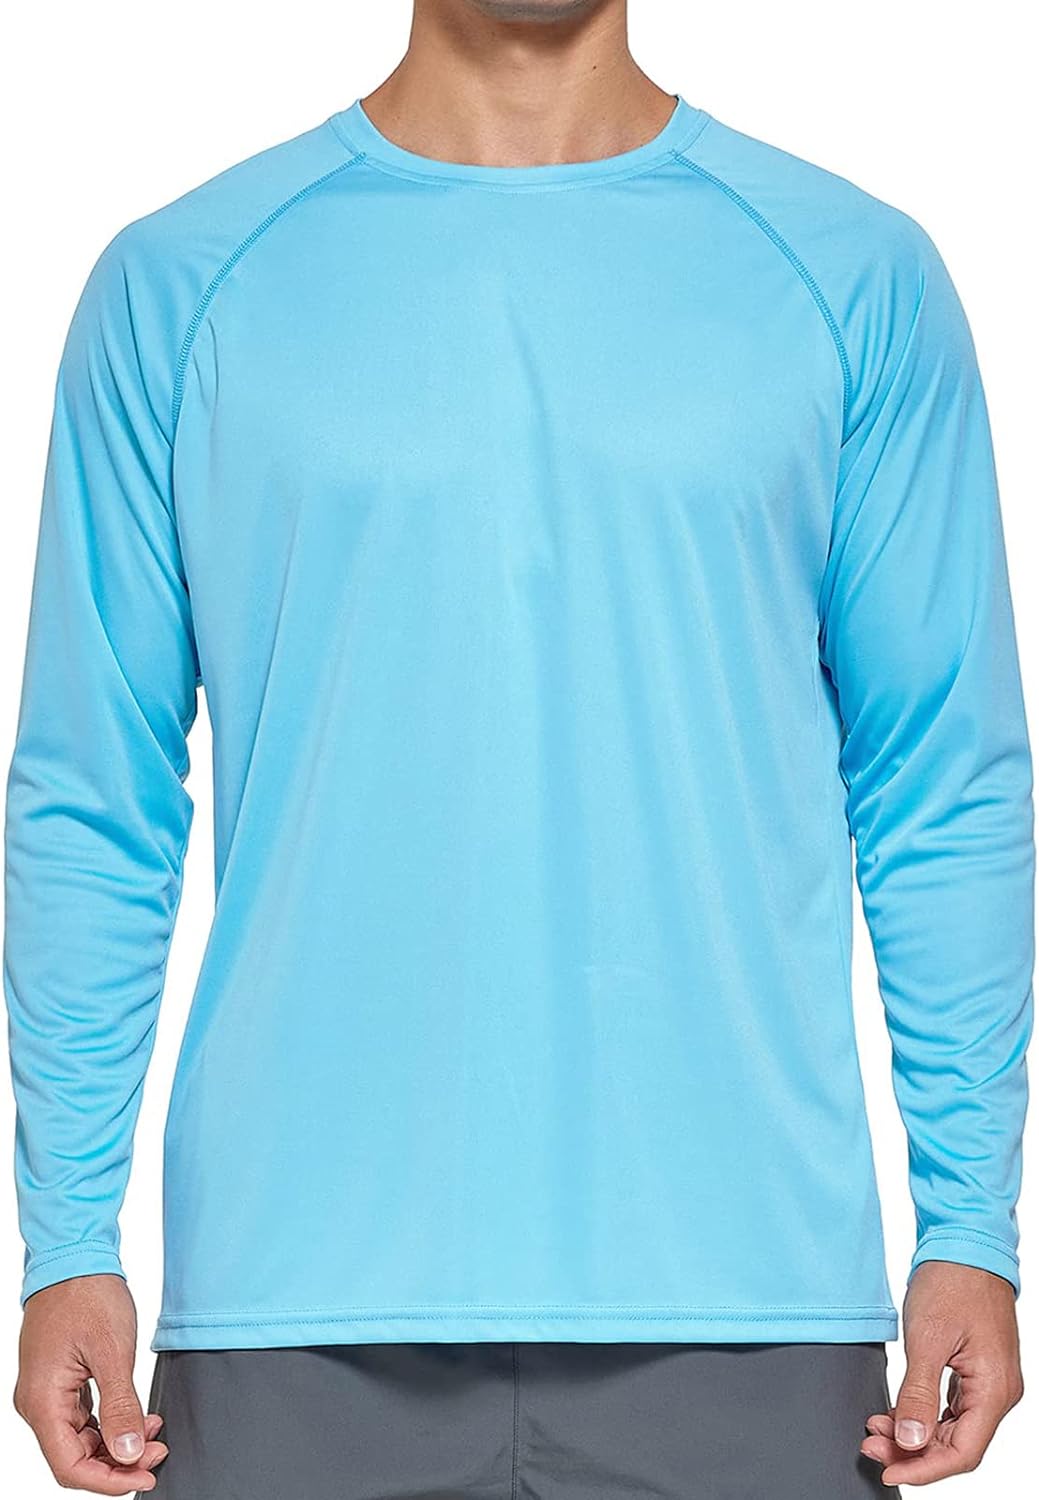 UV Long Sleeve Shirts Lightweight Quick Dry Shirt for Fishing Running Hiking Mens Sun Protection UPF 50